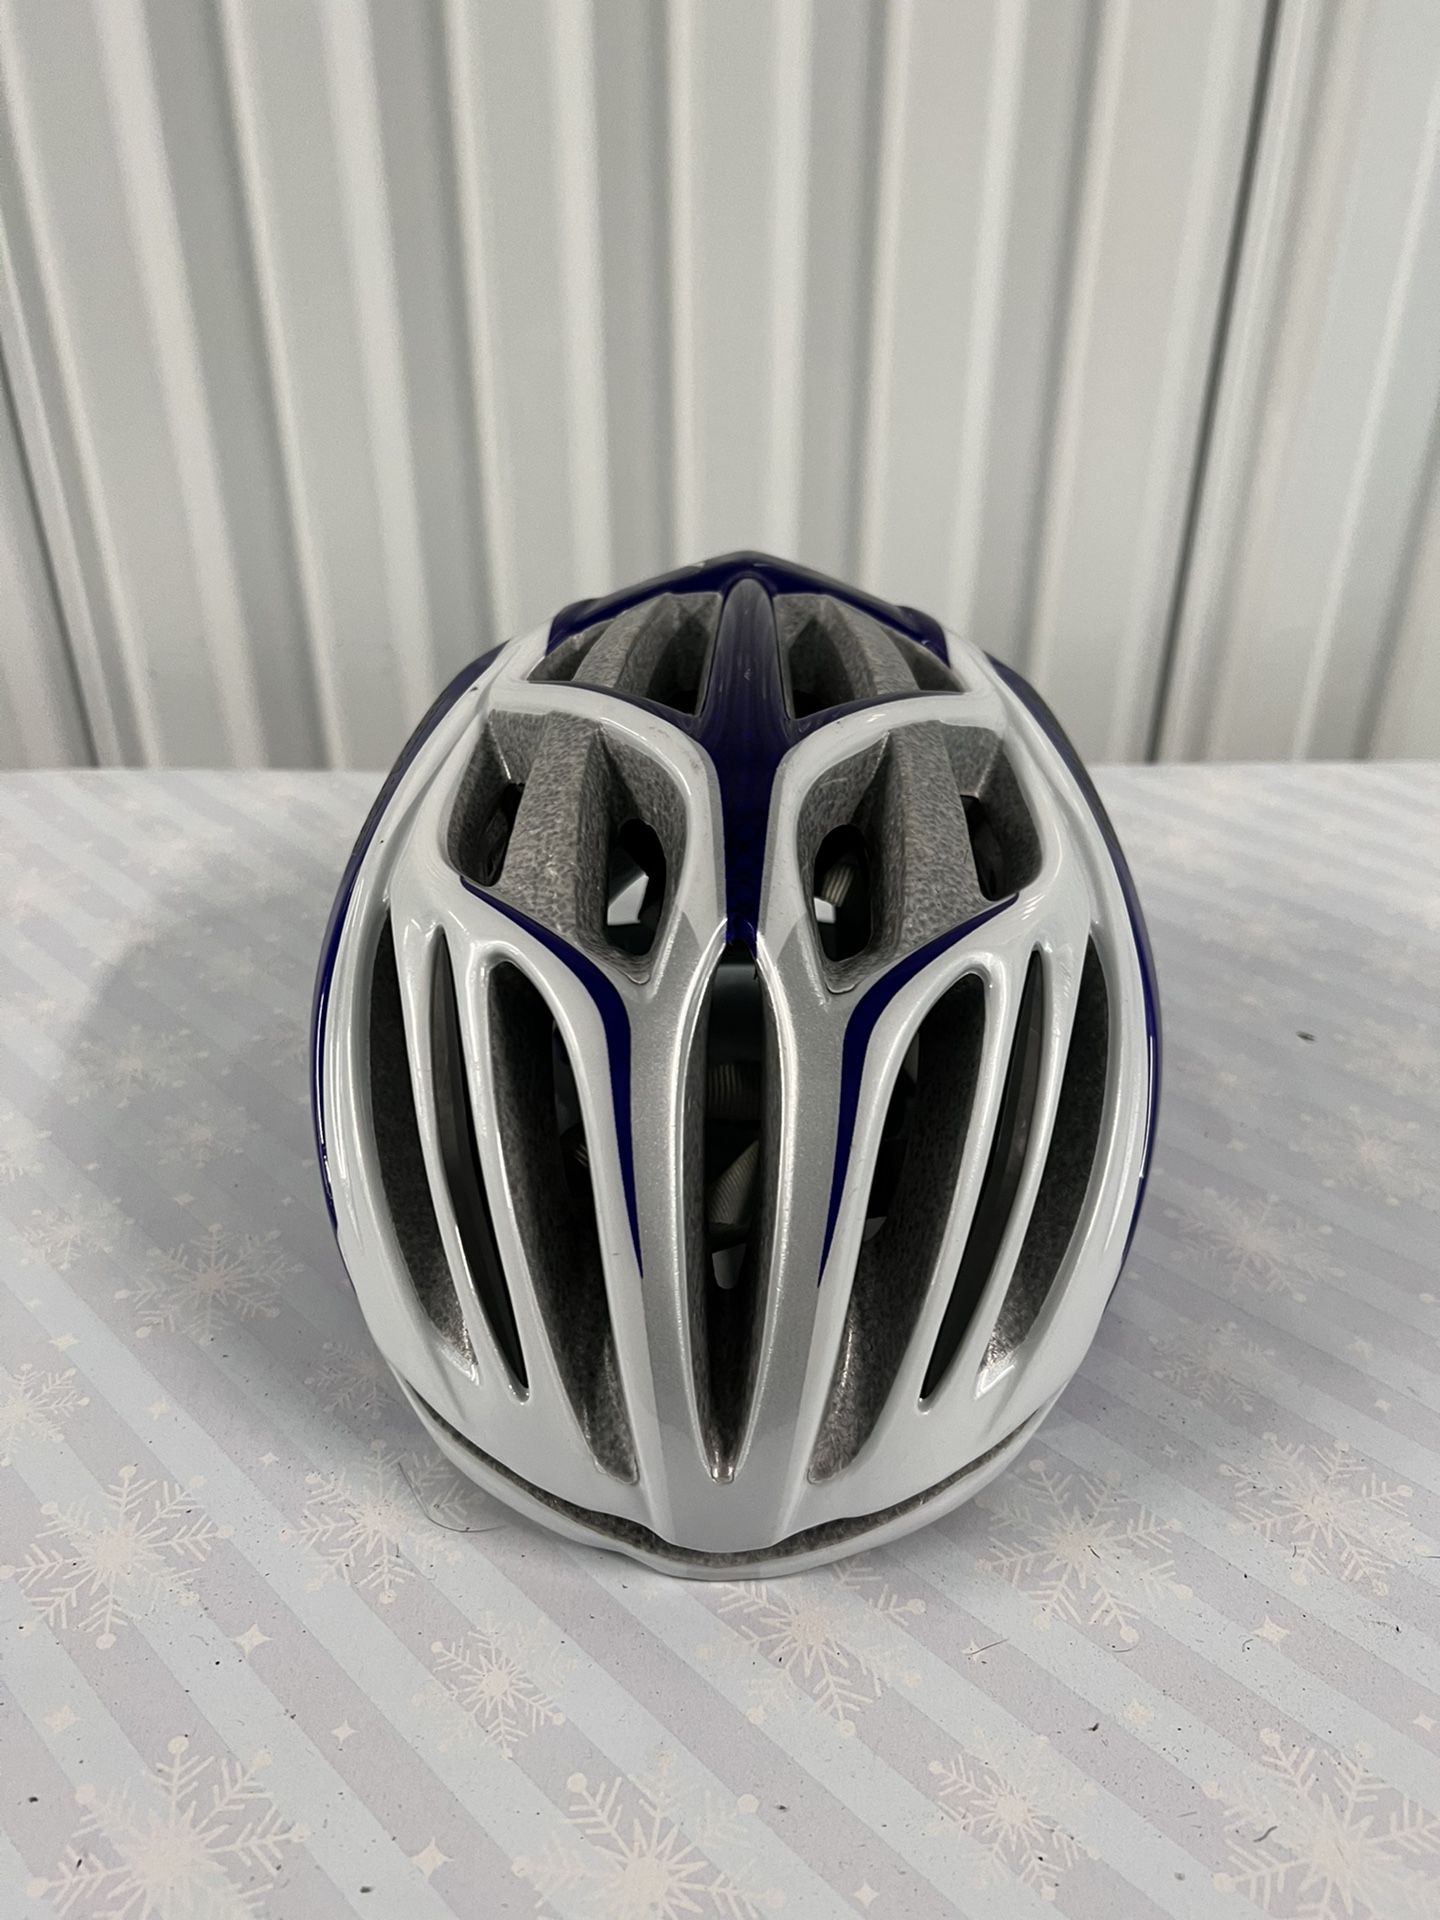 Specialized ASPIRE helmet cycling biking purple Small Cooling 51-57 Cm Freeship